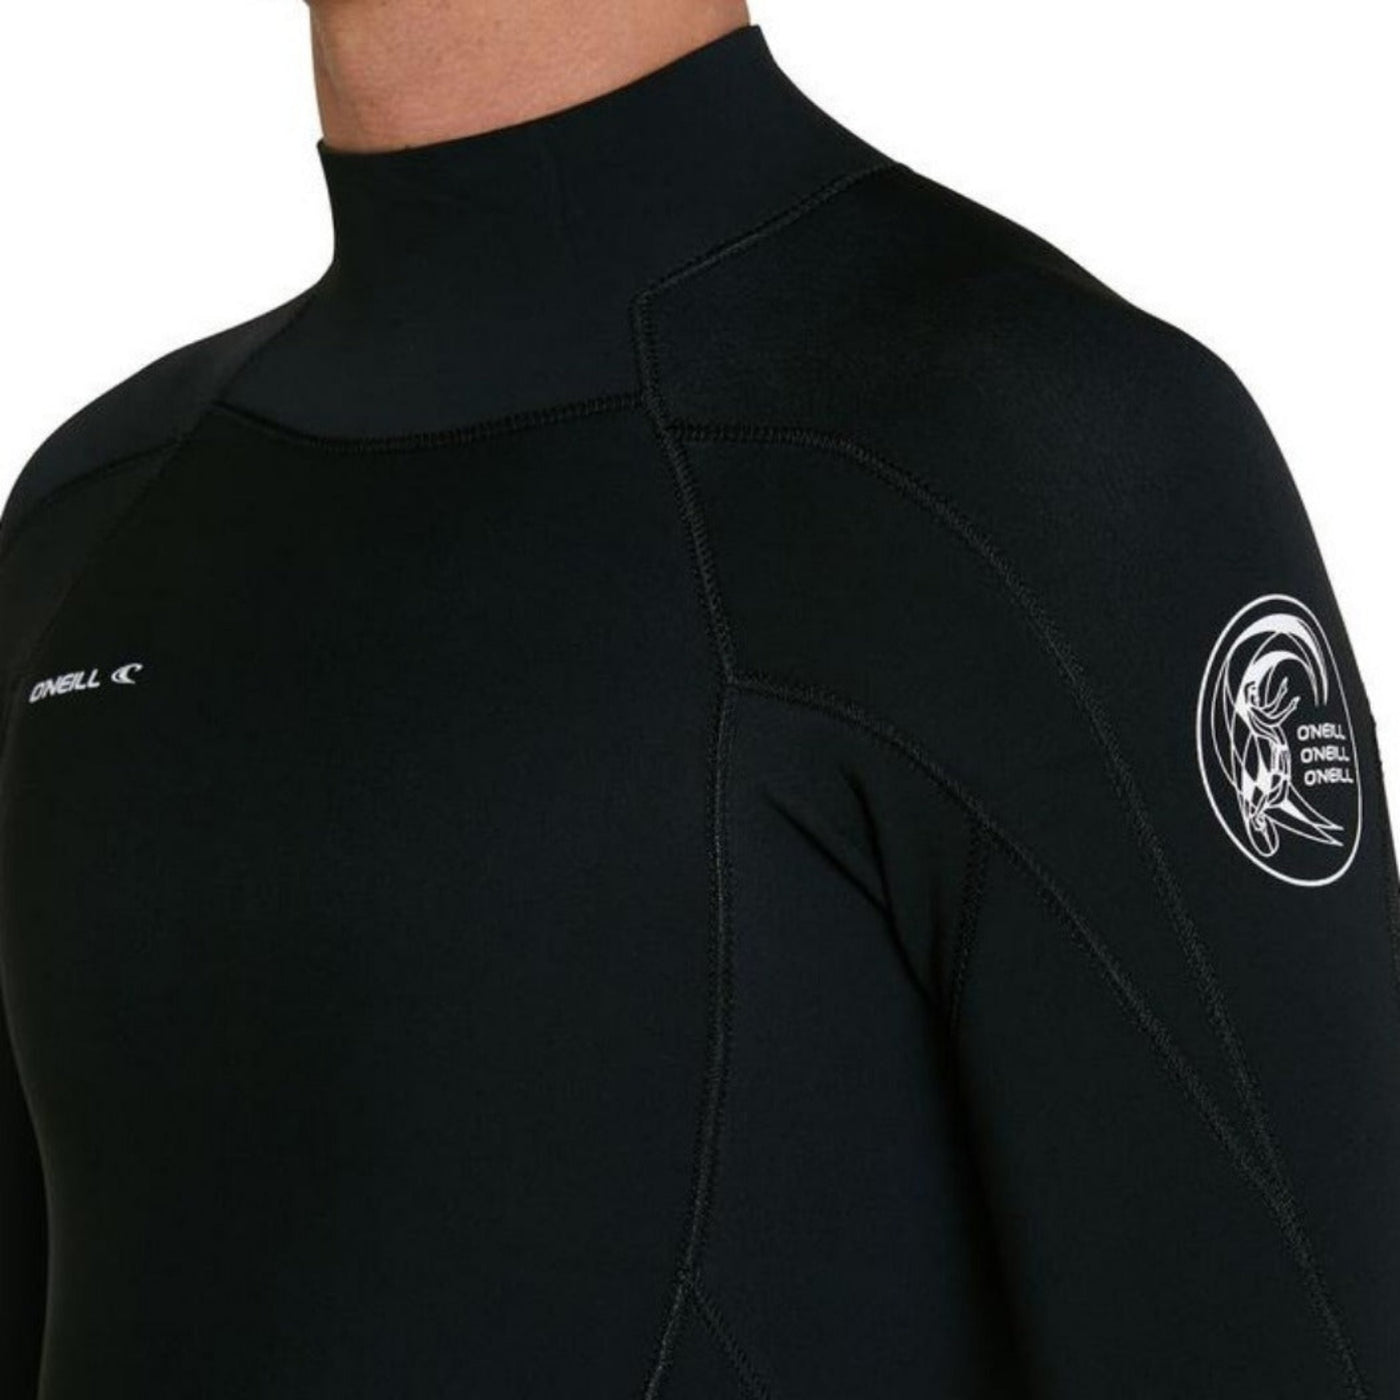 O'Neill Defender 4/3mm Steamer Wetsuit - Back Zip